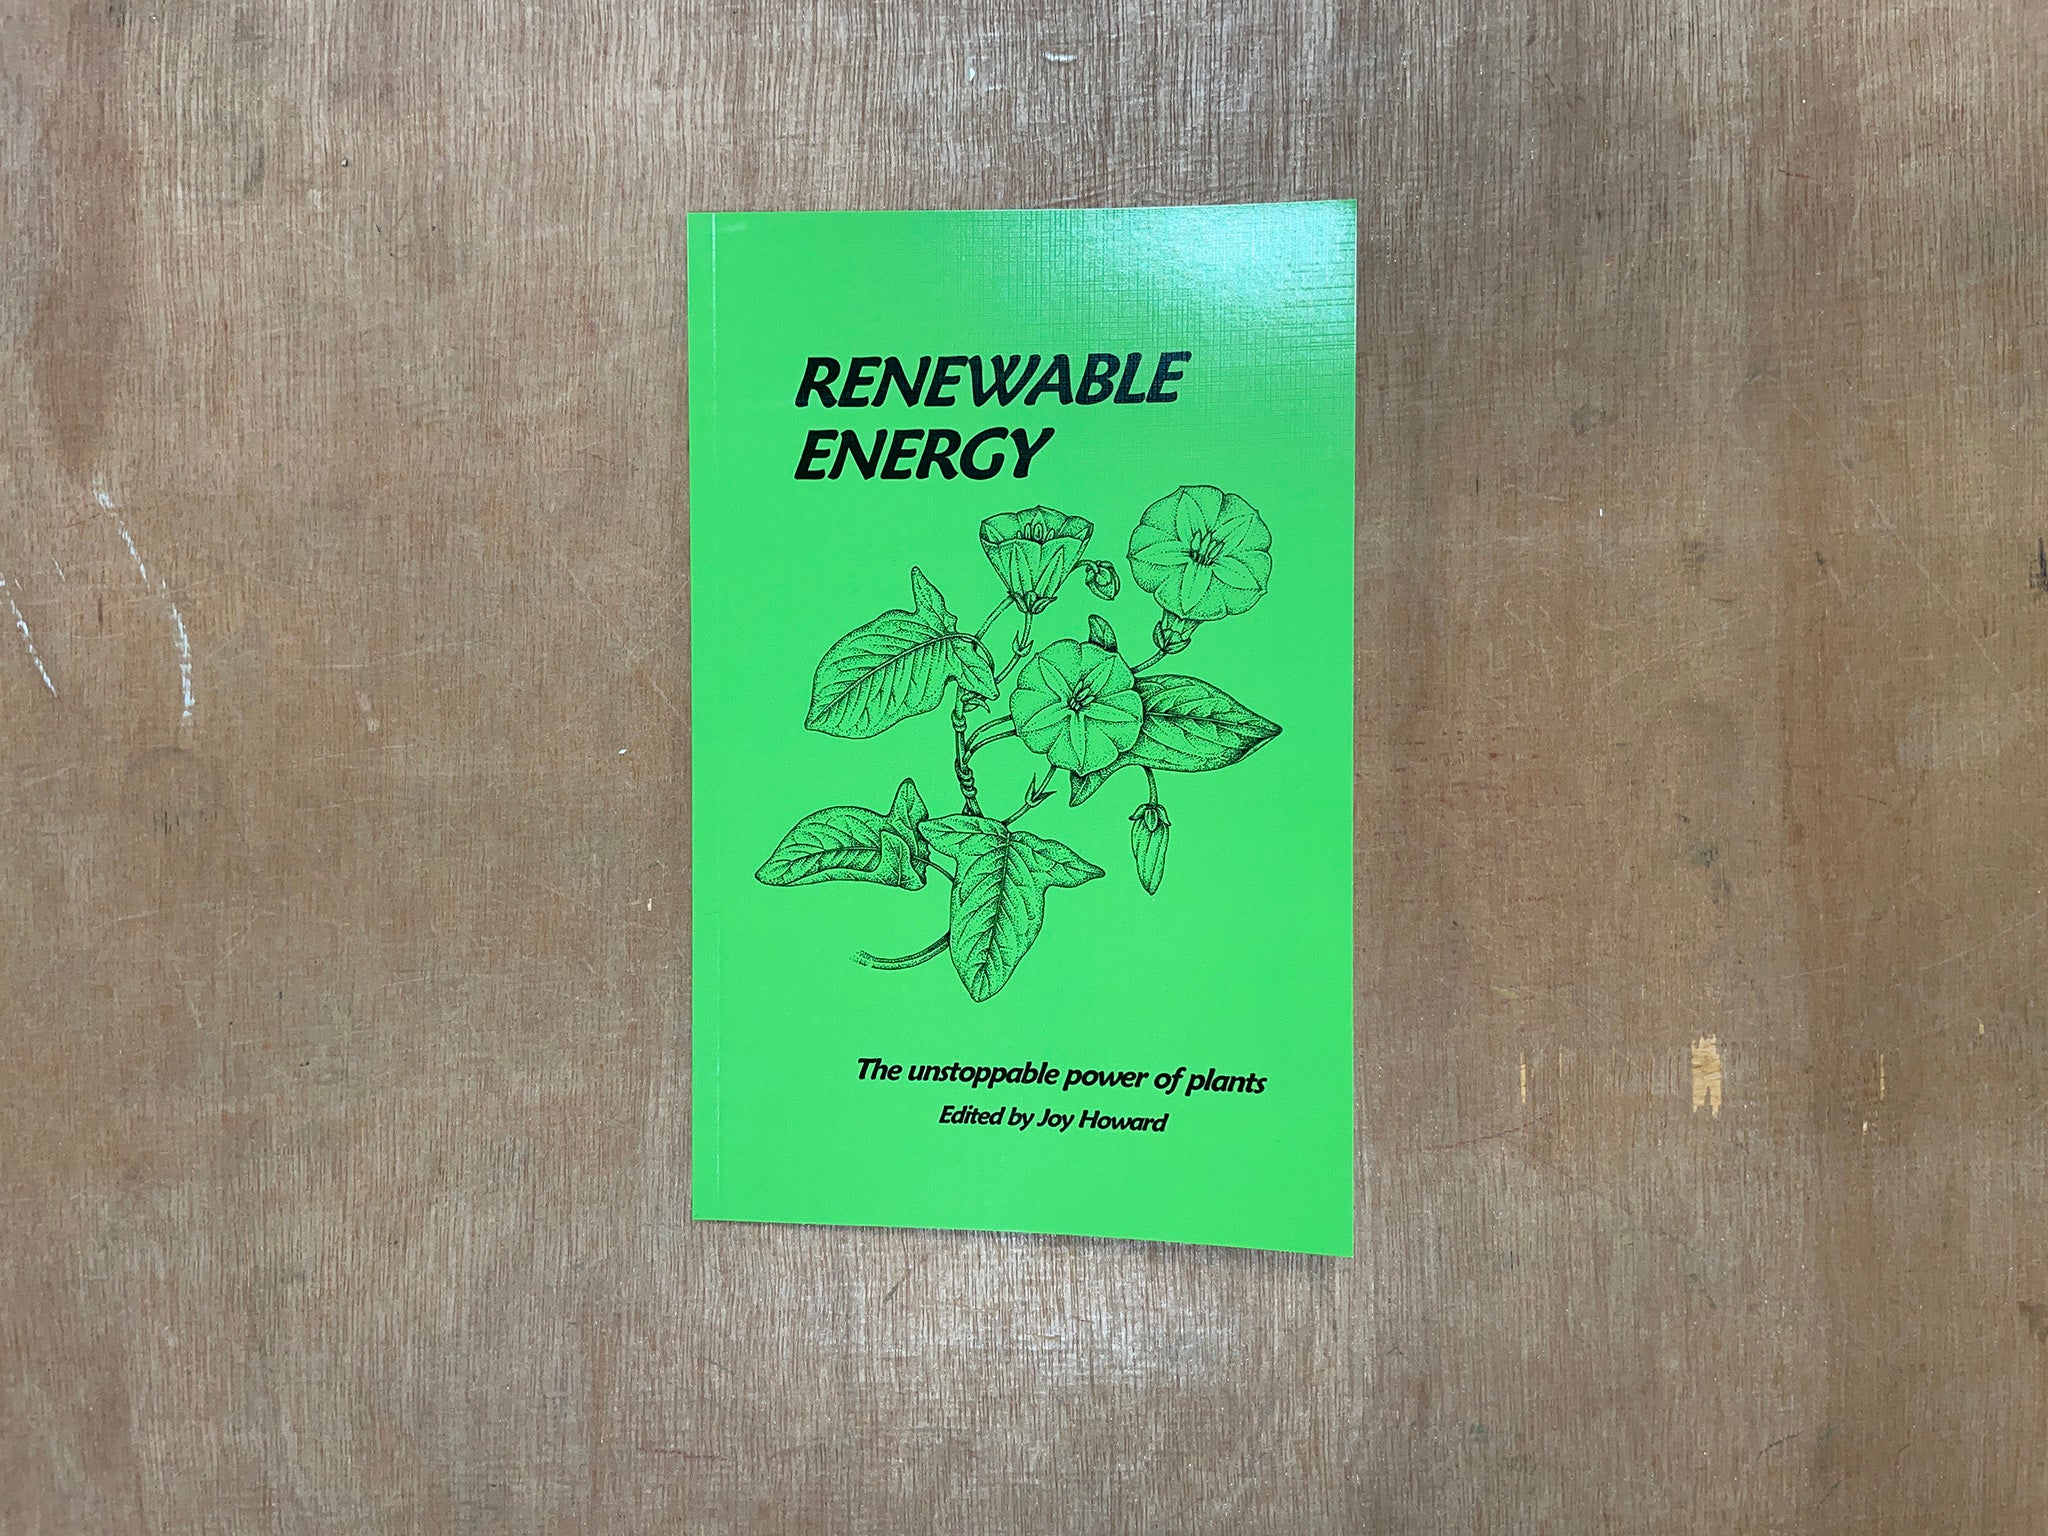 RENEWABLE ENERGY Edited by Joy Howard